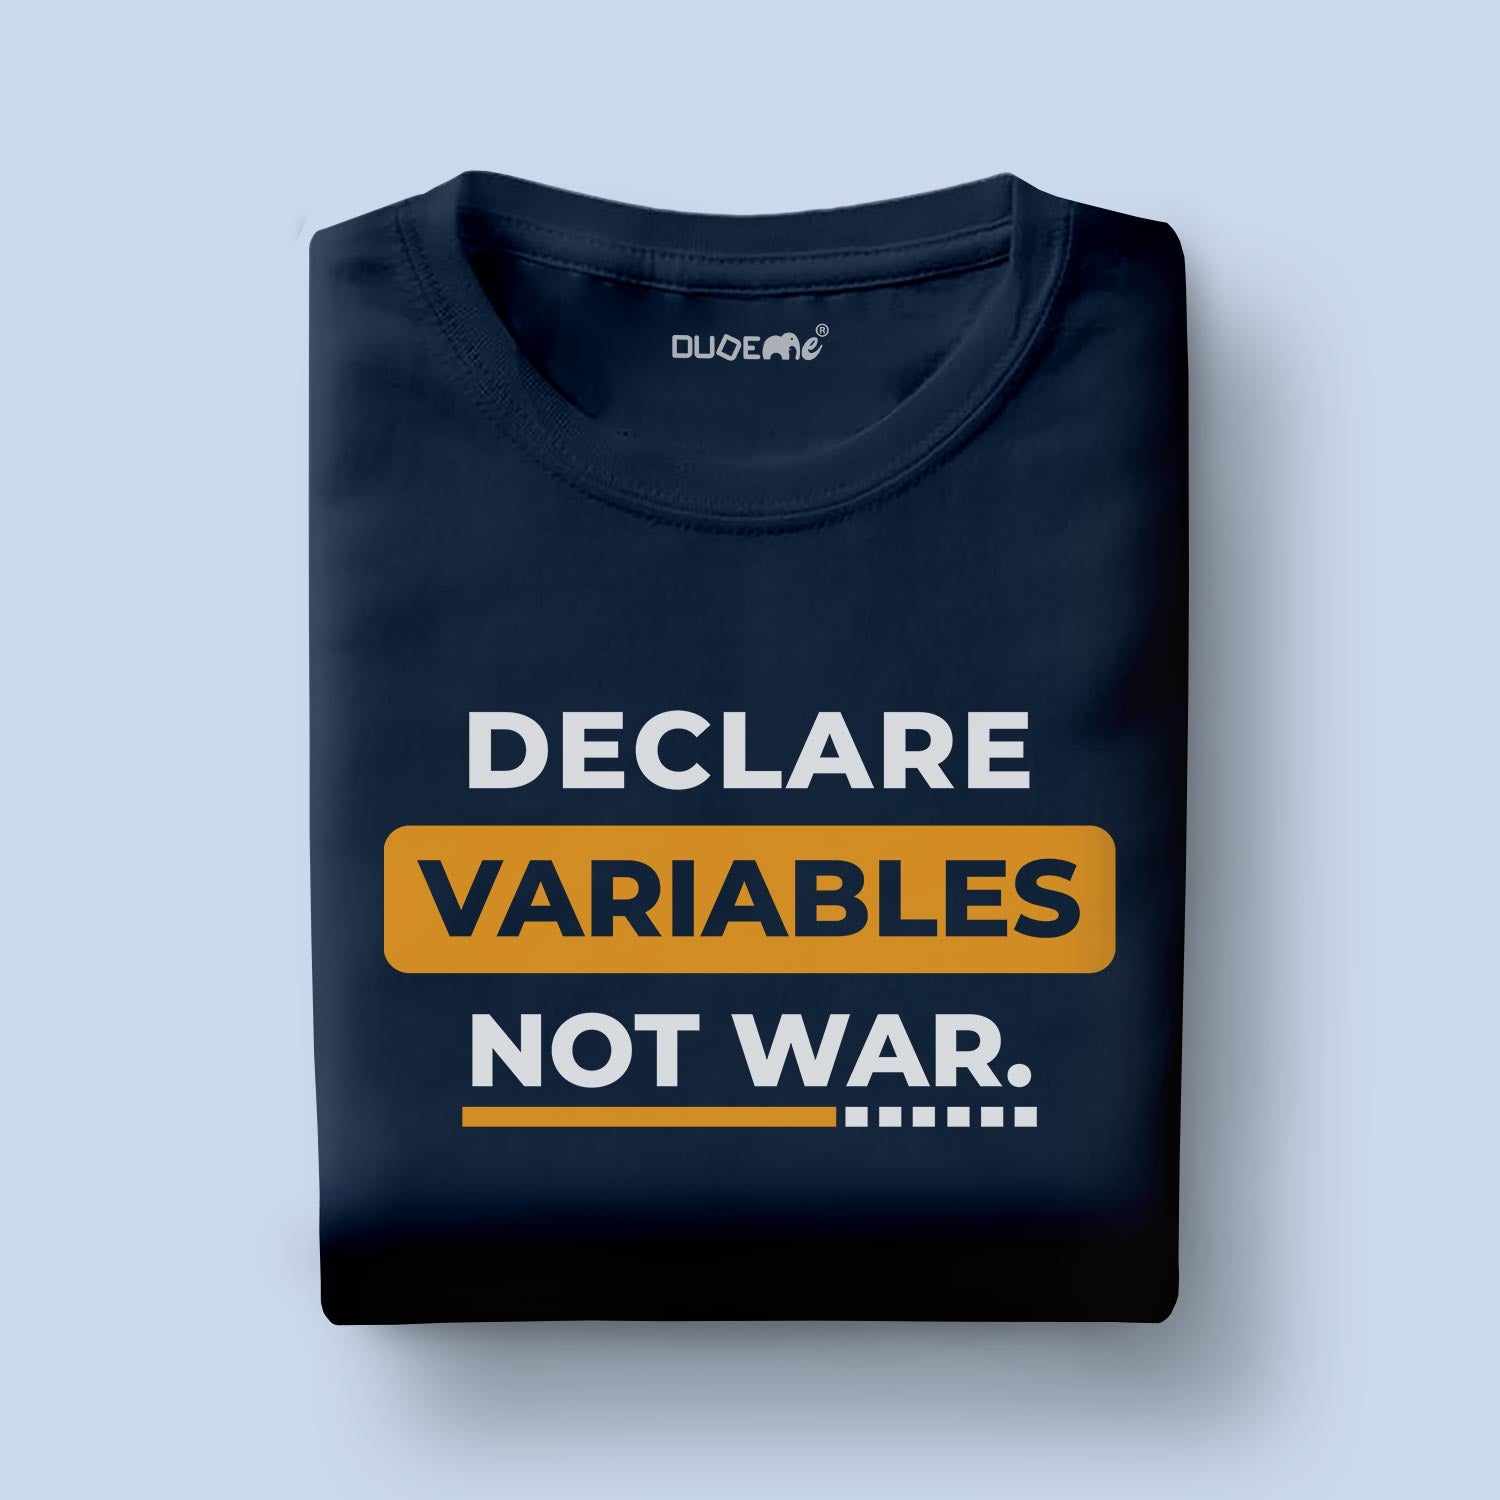 Declare Variables not War Half Sleeve Unisex T-Shirt